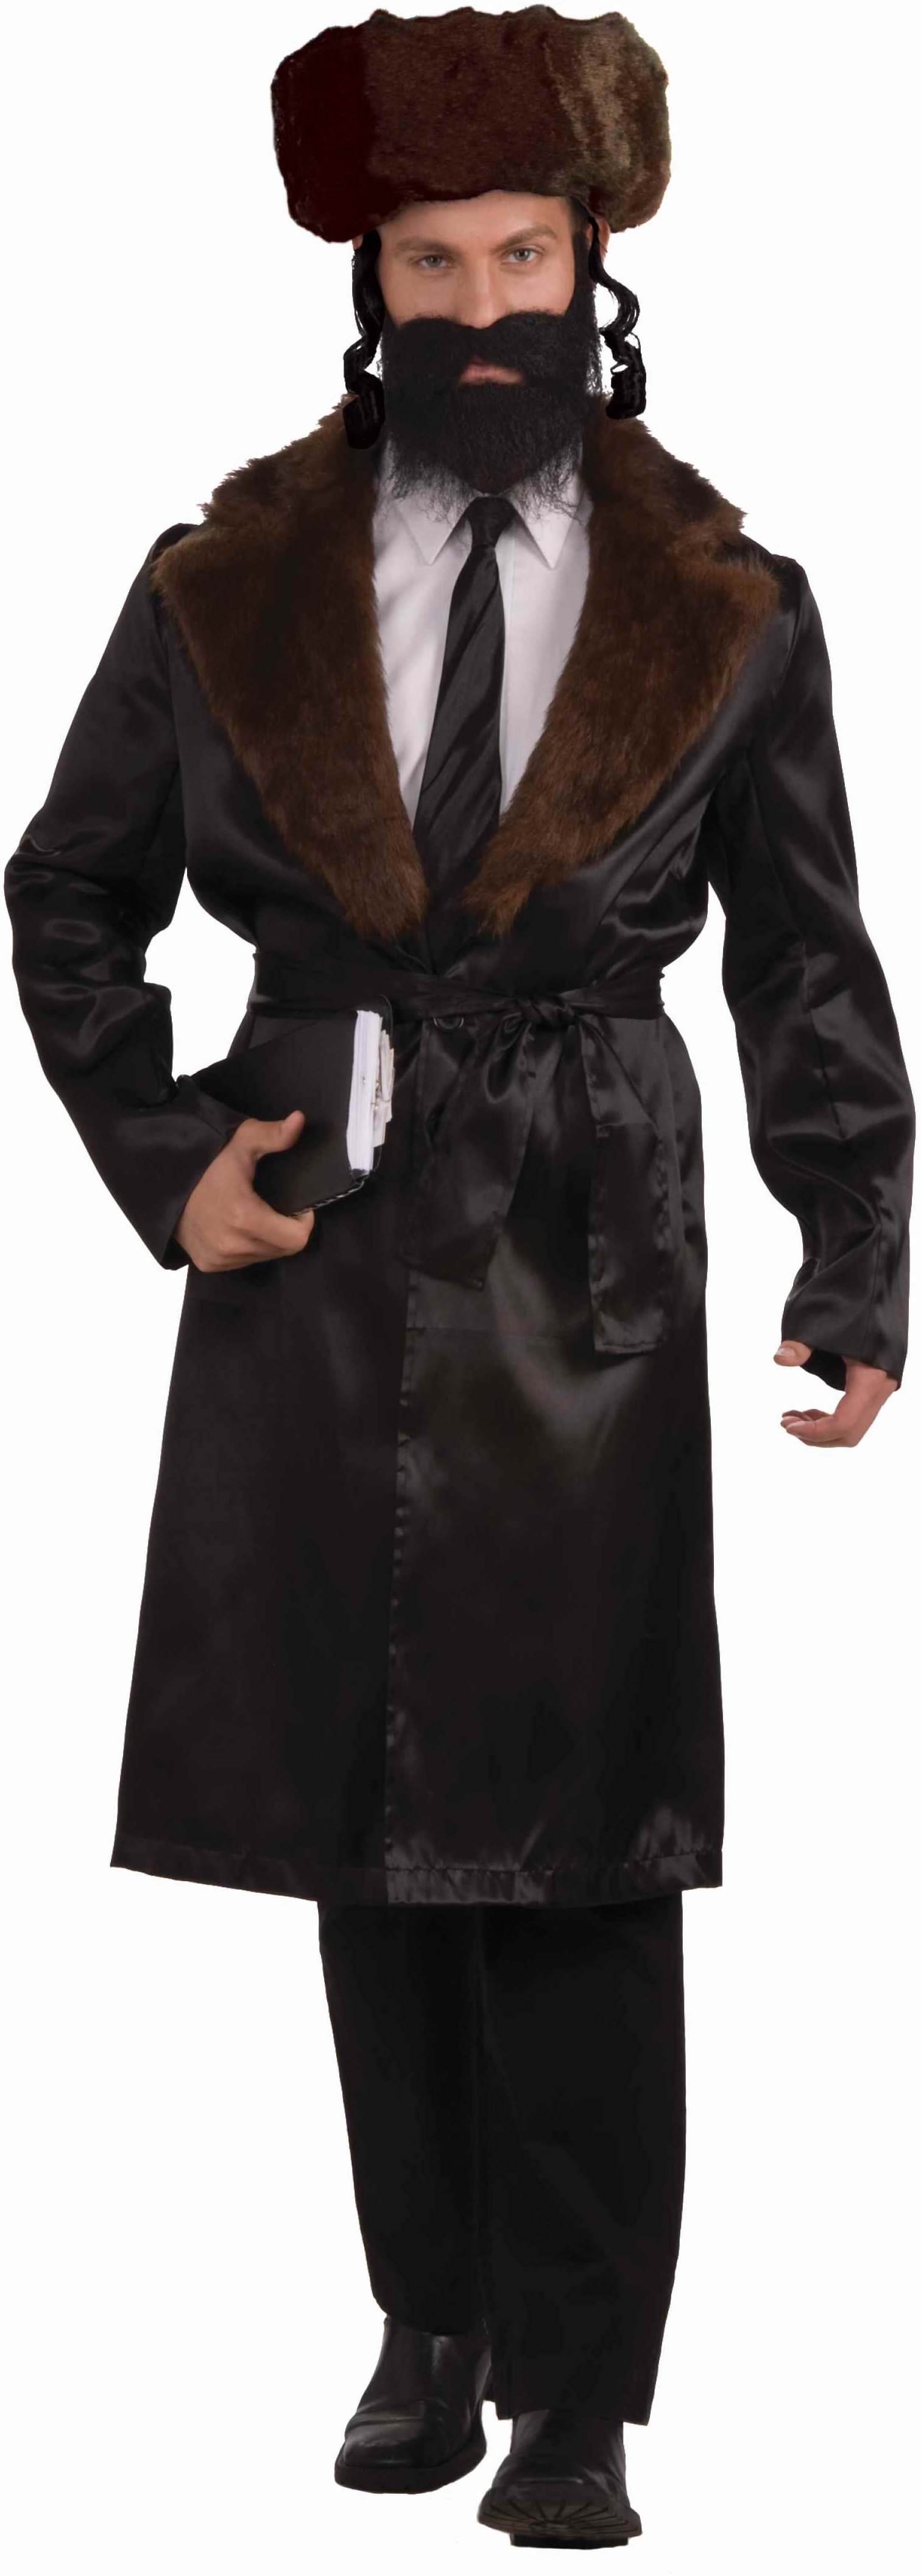 Rabbi Adult Costume - Click Image to Close